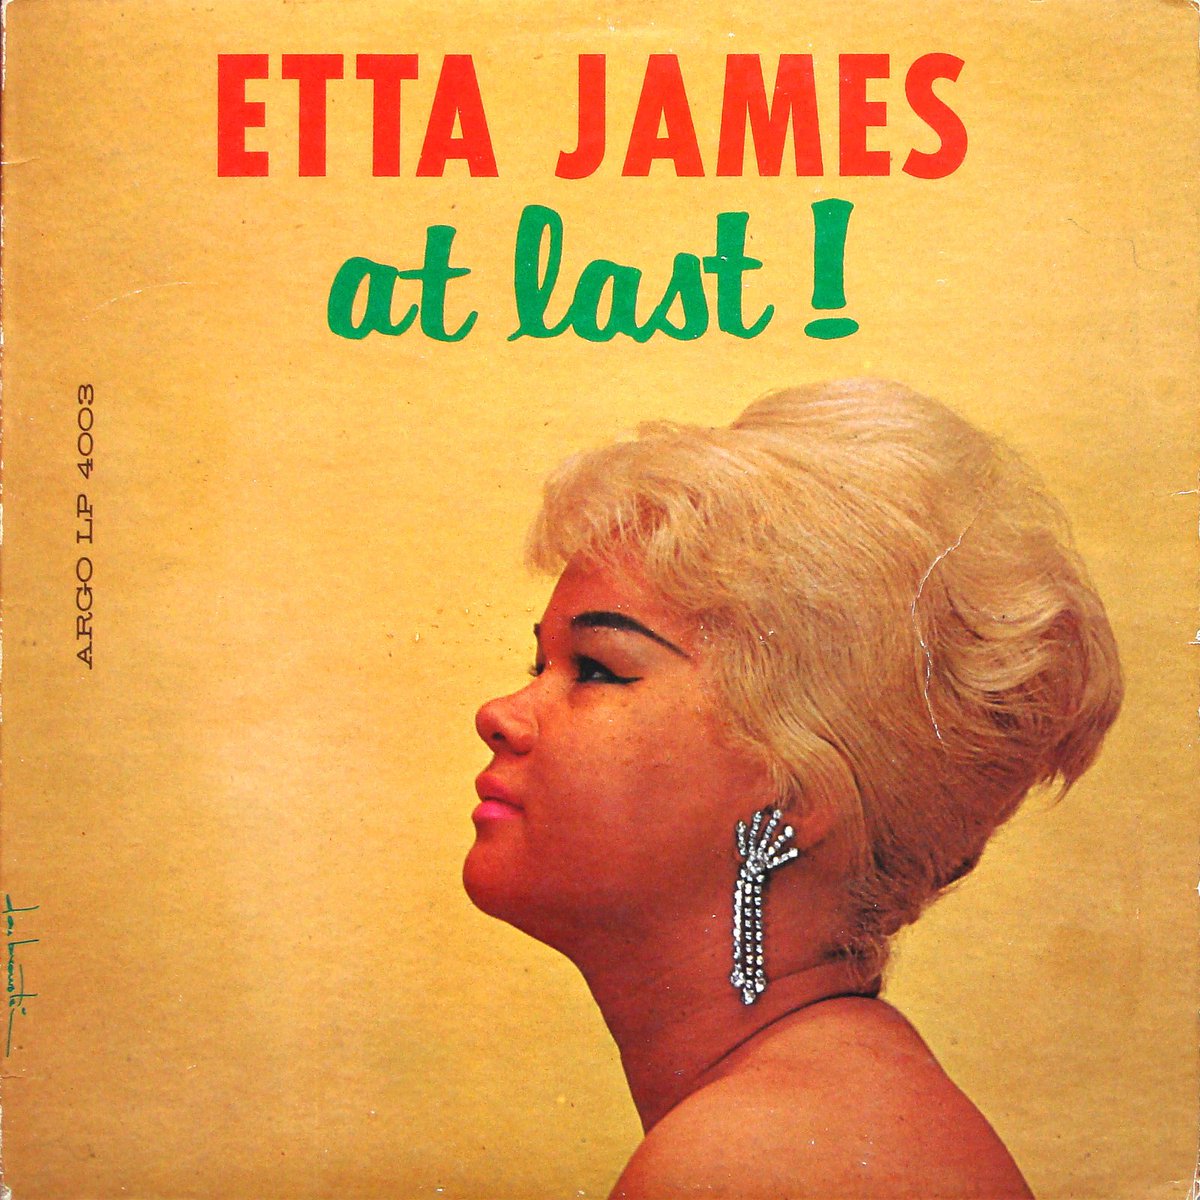 1960AOTY: Joan Baez - Joan Baez#2: John Coltrane - Giant Steps#3: Brenda Lee - Brenda Lee#4: Etta James - At Last!Total: 9